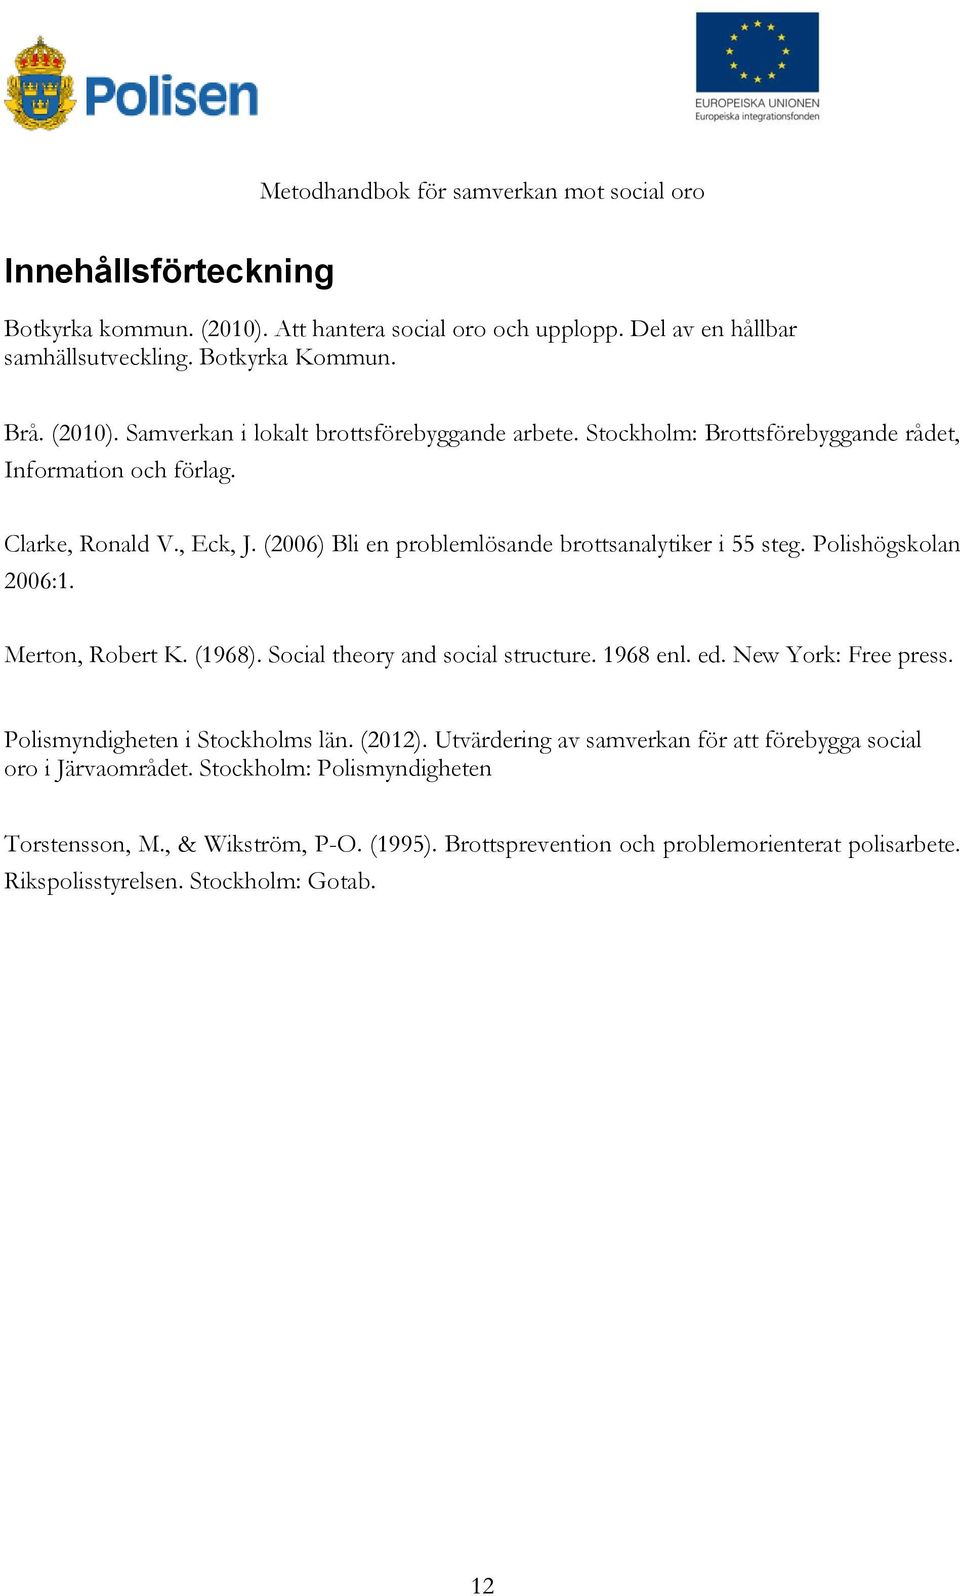 (1968). Social theory and social structure. 1968 enl. ed. New York: Free press. Polismyndigheten i Stockholms län. (2012).